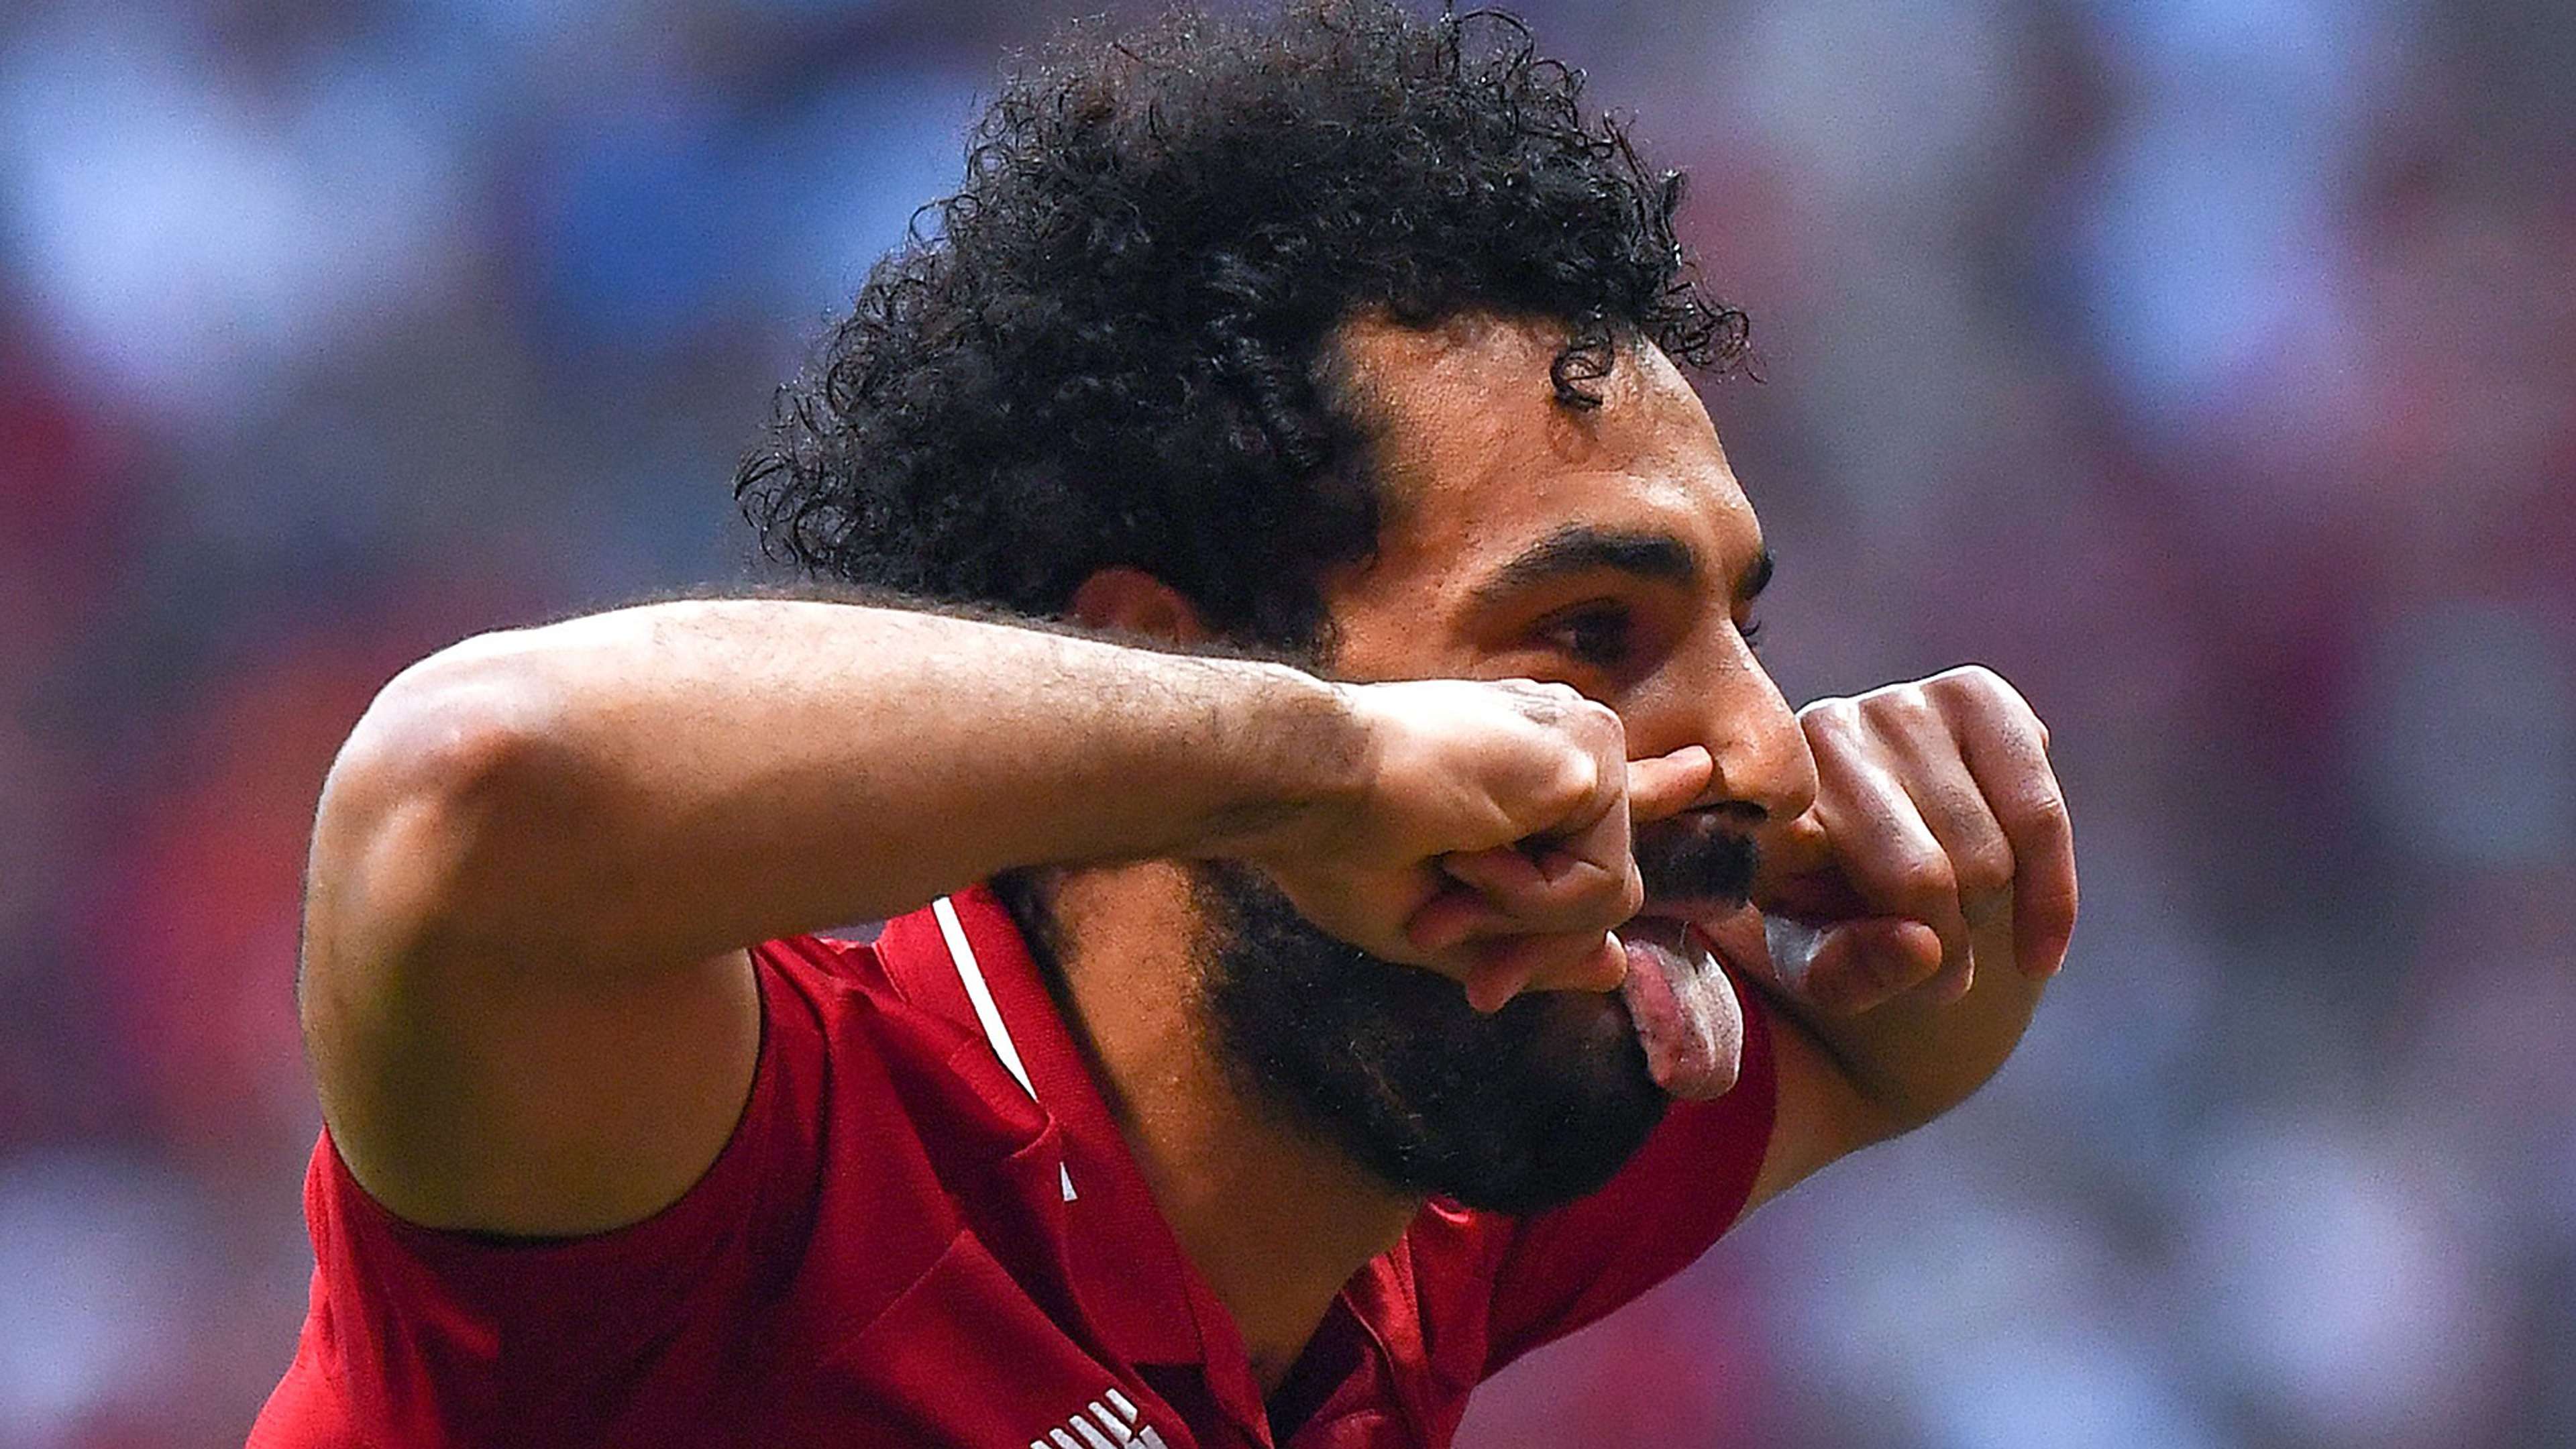 Mohamed Salah Liverpool celebration 2018-19